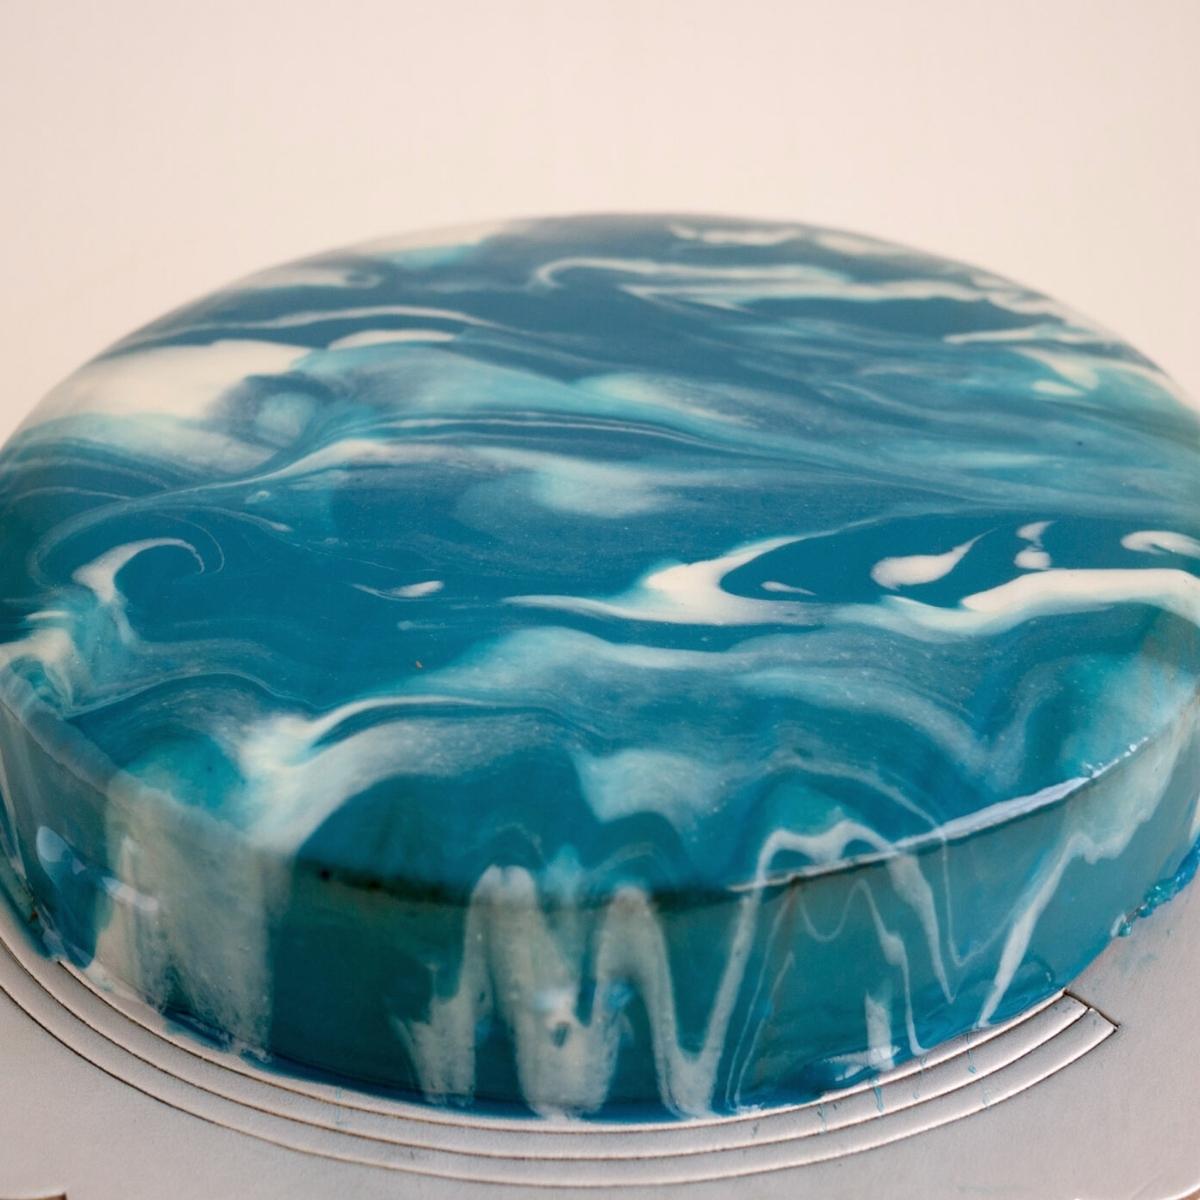 Mirror Glaze Cake Recipe Veena Azmanov, What Kind Of Cake Can You Mirror Glaze